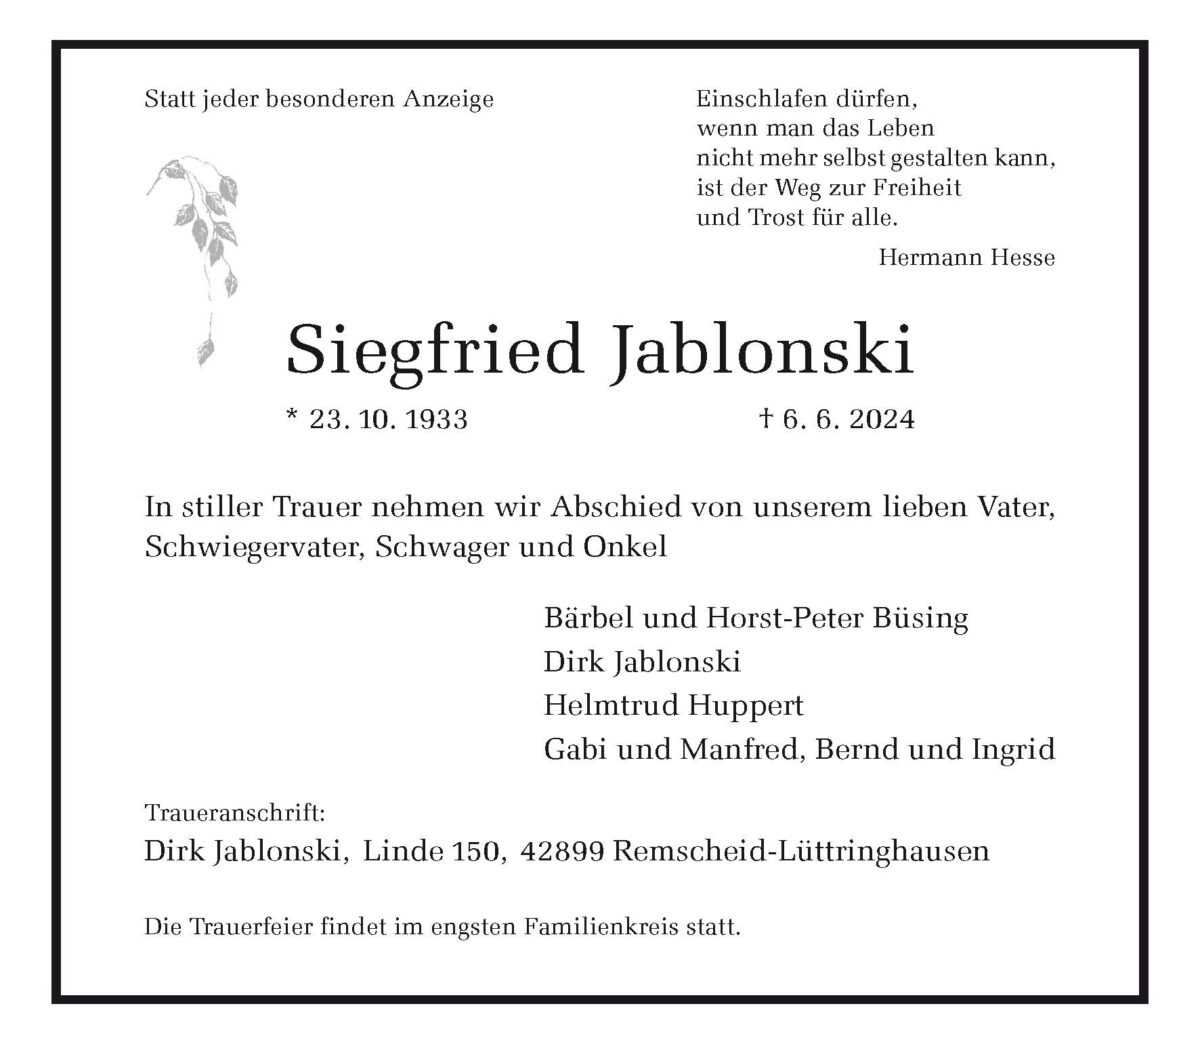 Siegfried Jablonski